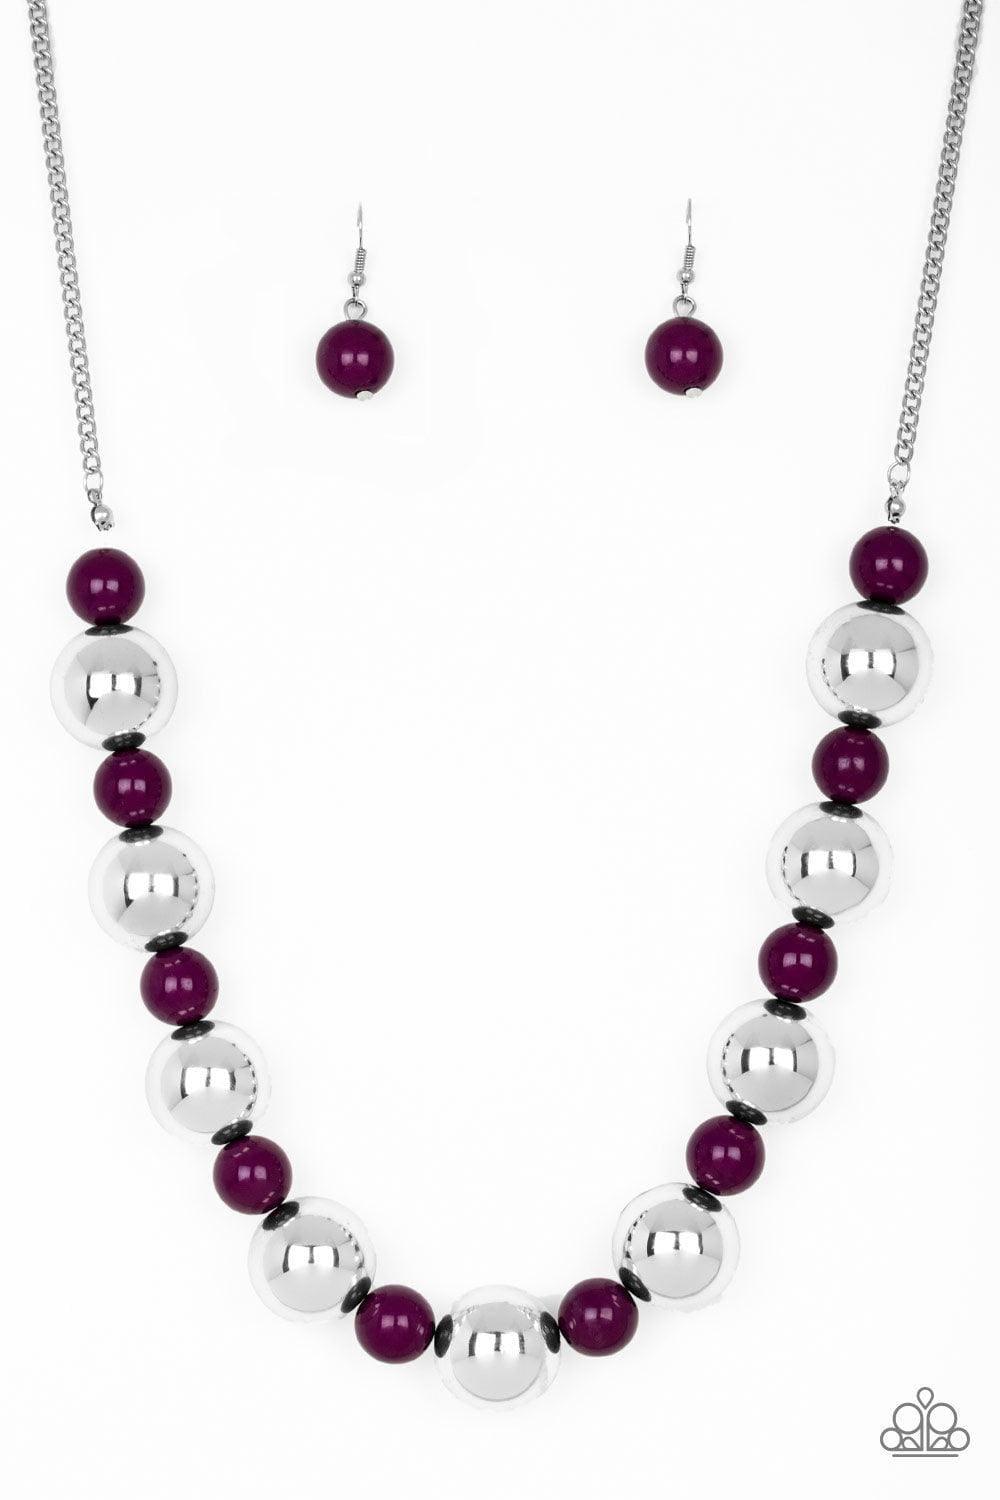 Paparazzi Accessories - Top Pop - Purple Necklace - Bling by JessieK